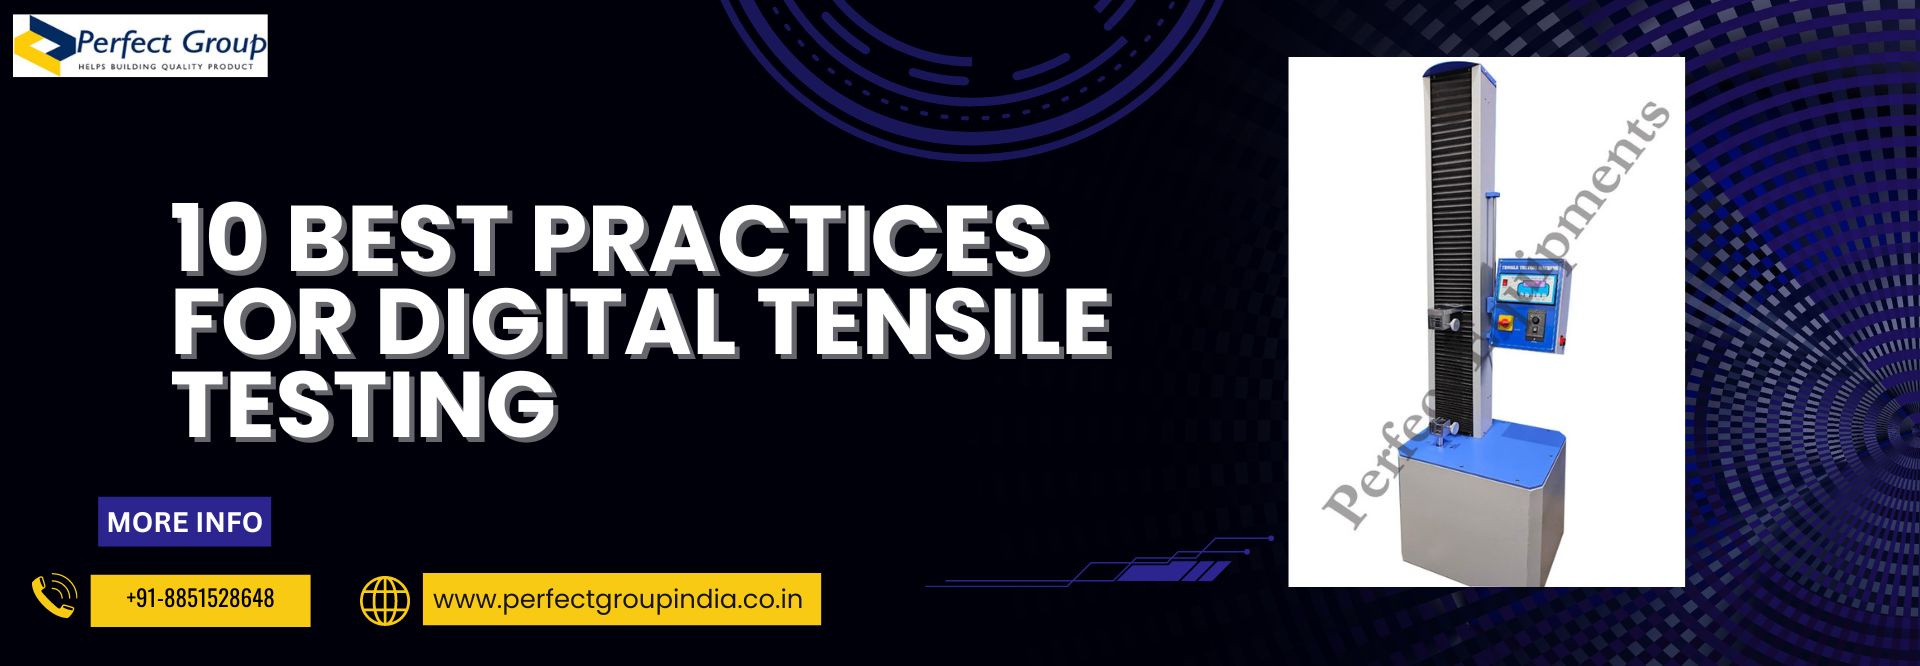 10 Best Practices for Digital Tensile Testing